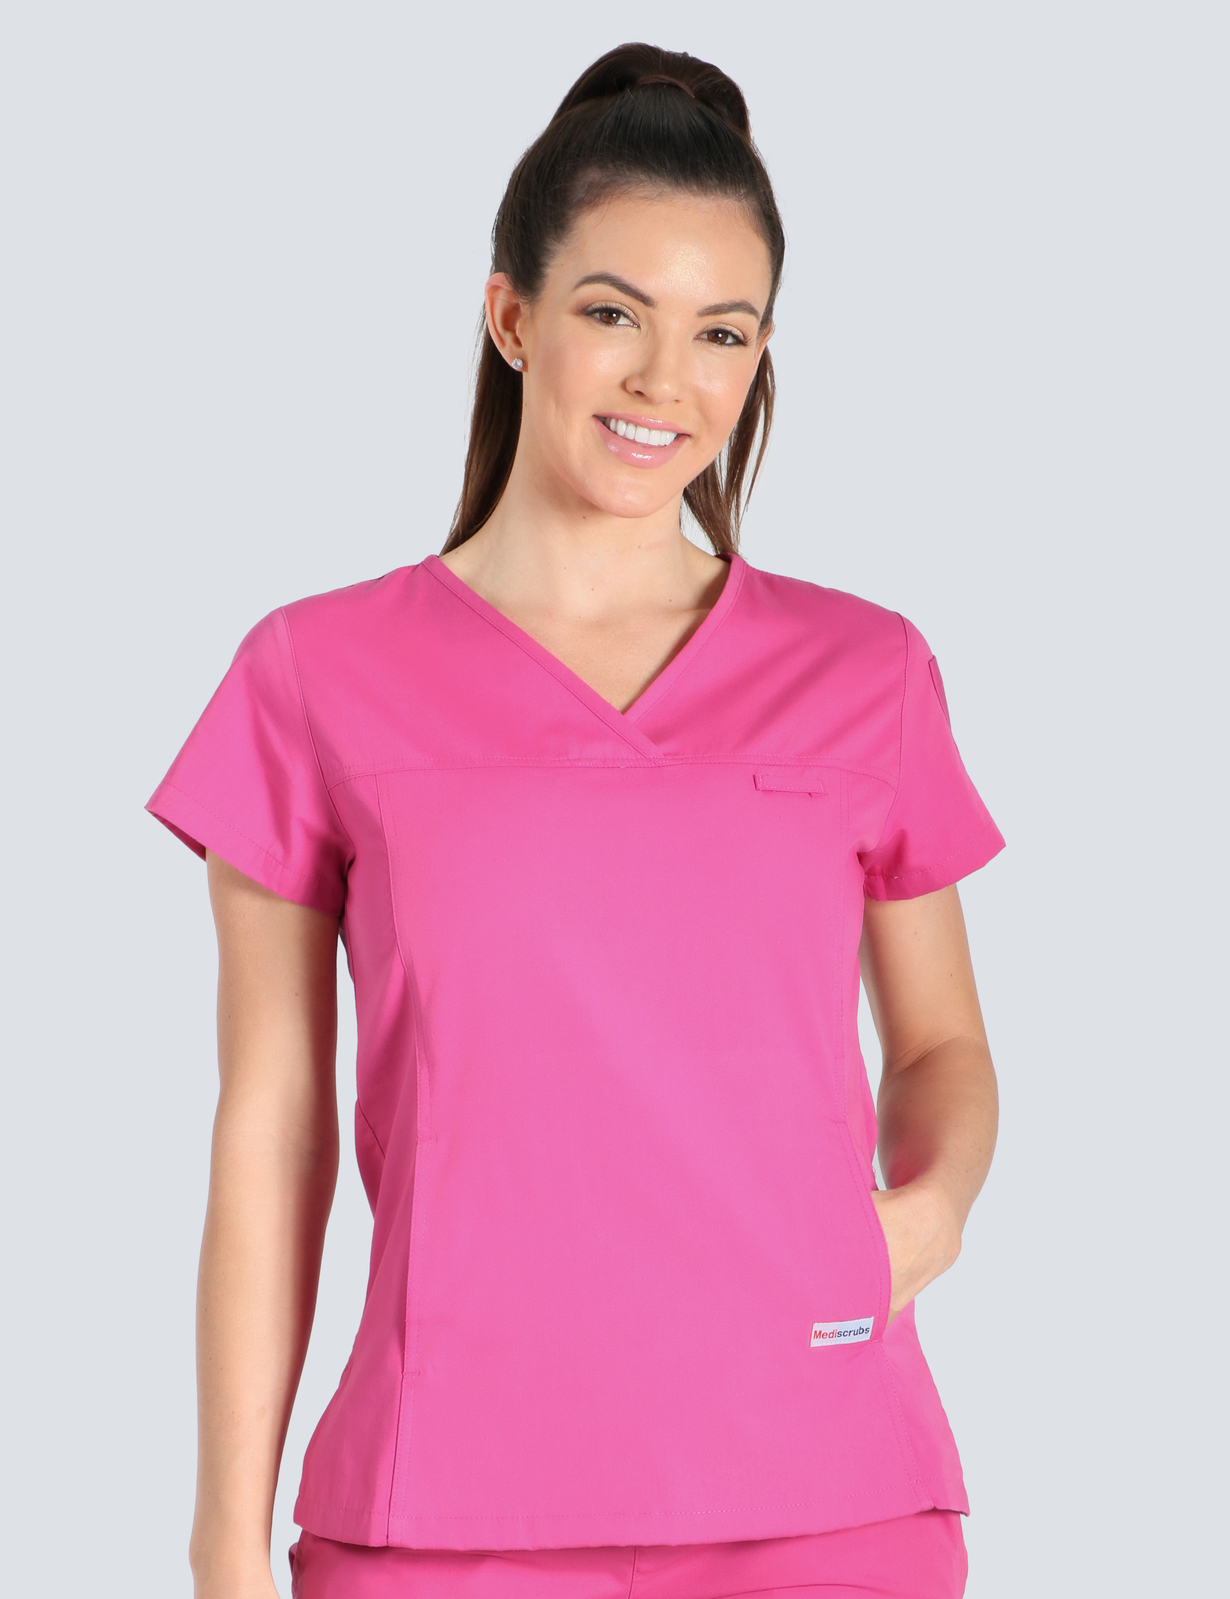 Queensland Children's HospitalEmergency Department Senior Medical Officer Uniform Top Bundle  (Women's Fit Top in Pink  incl Logos)